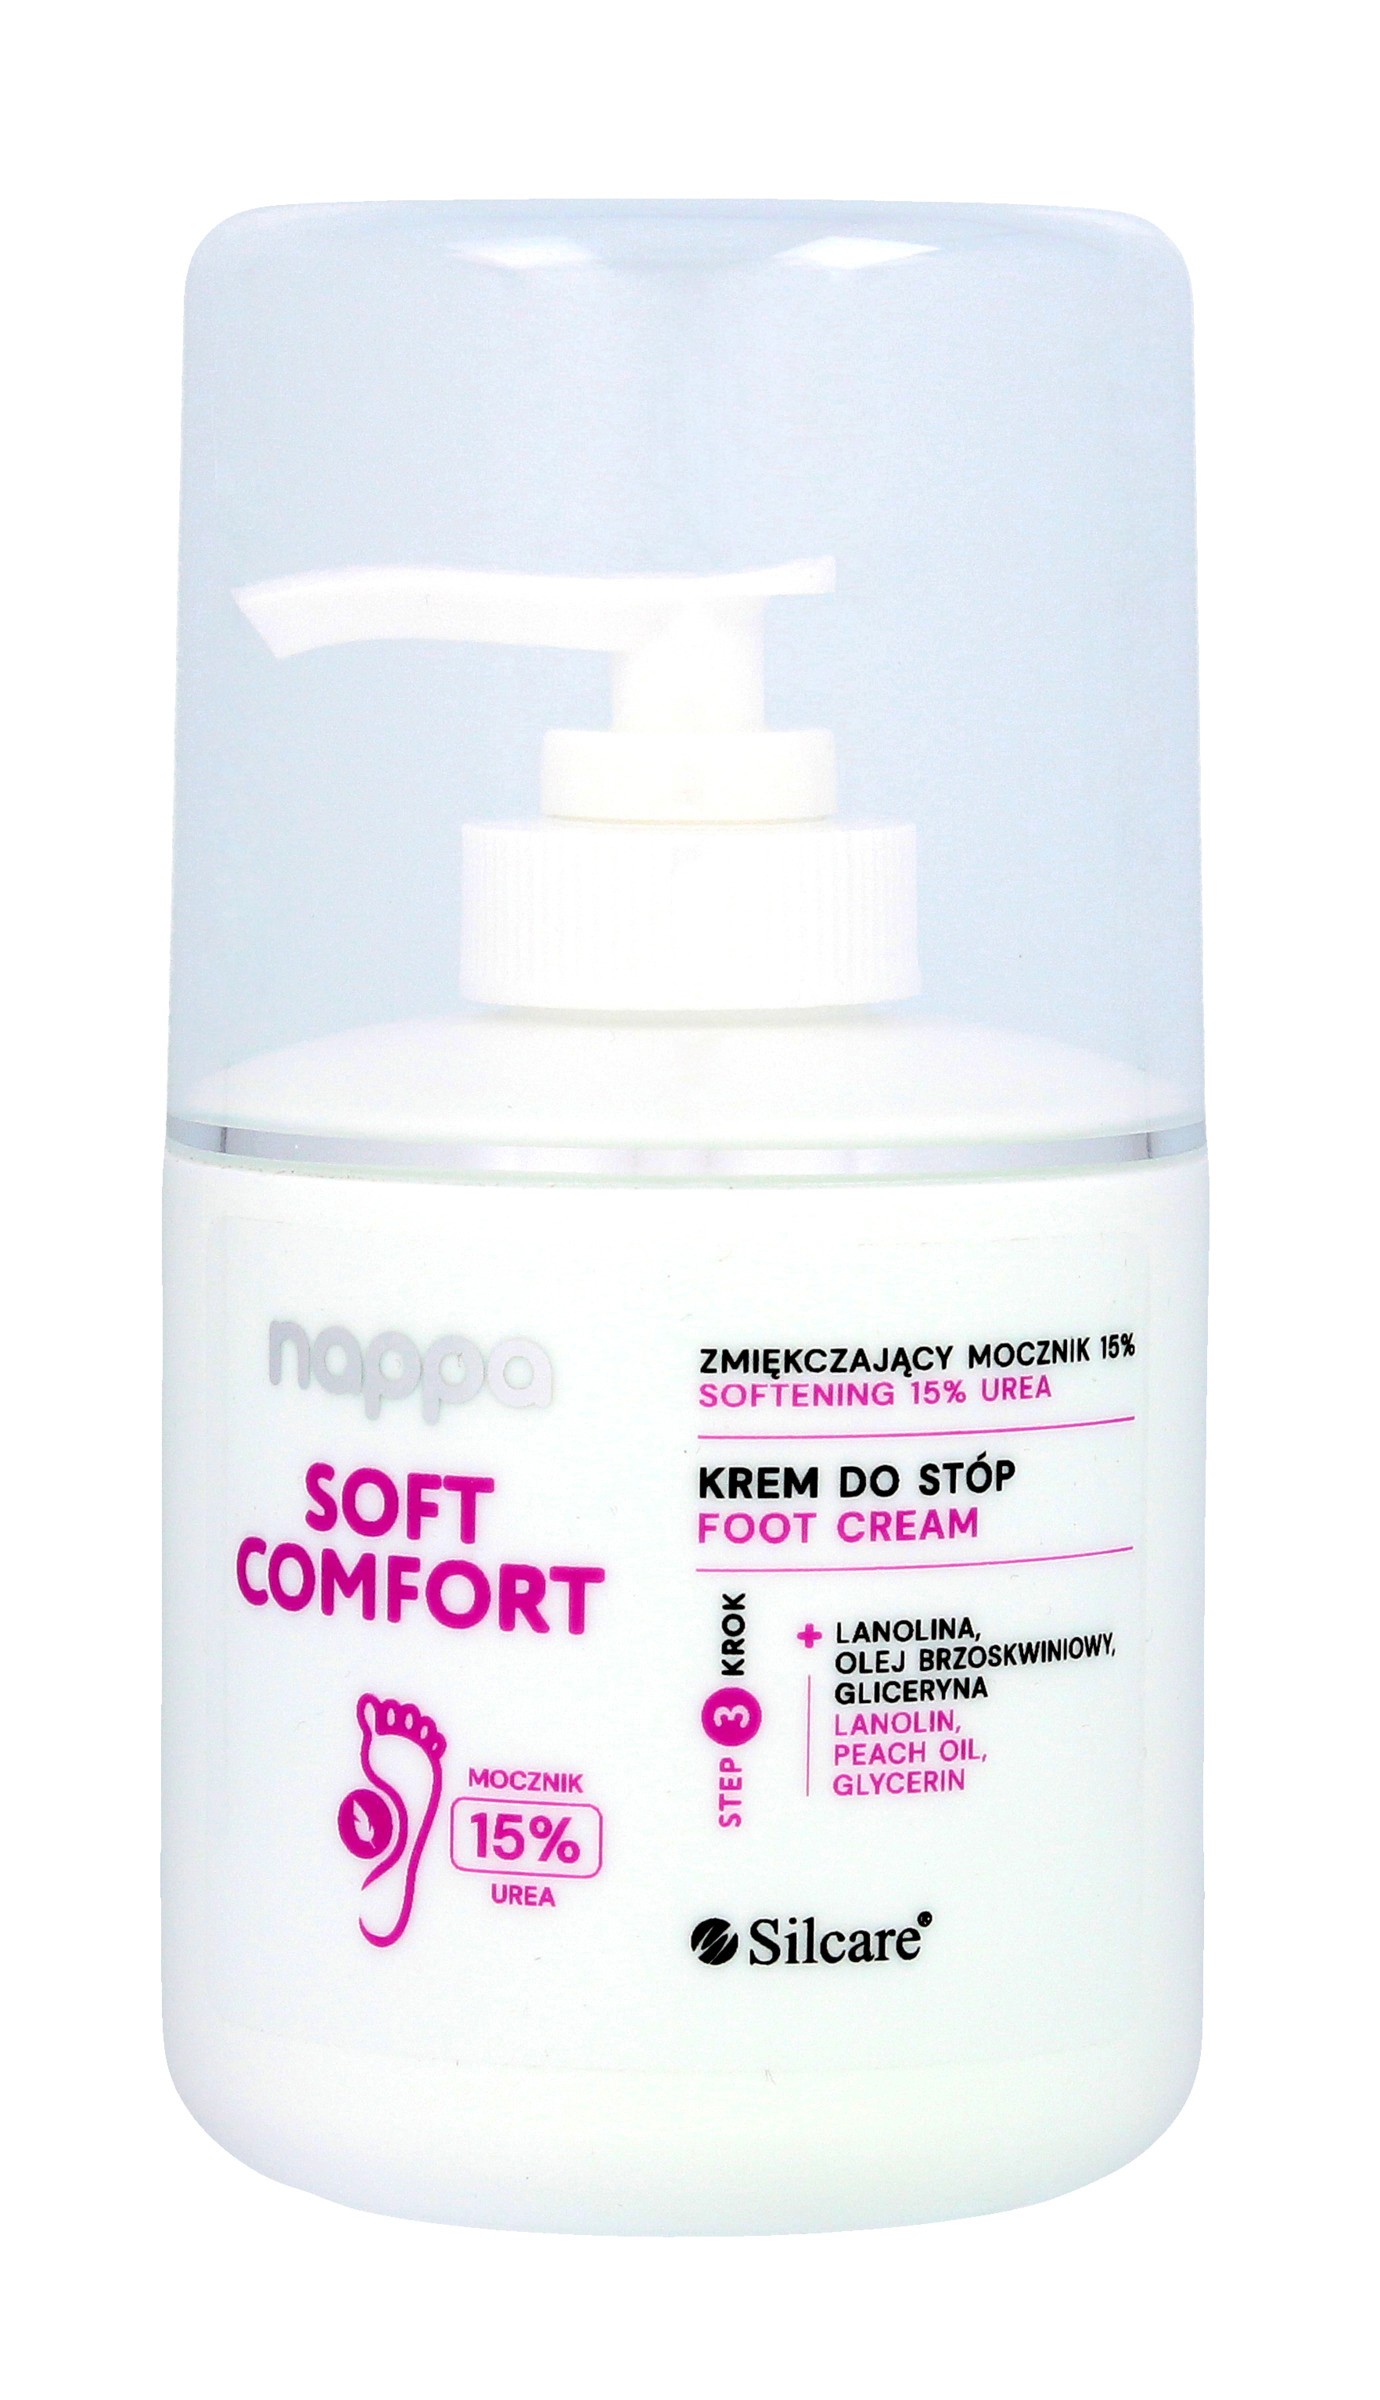 Silcare Nappa Soft Comfort Krem do stóp - zmiękczający mocznik 15% 250ml